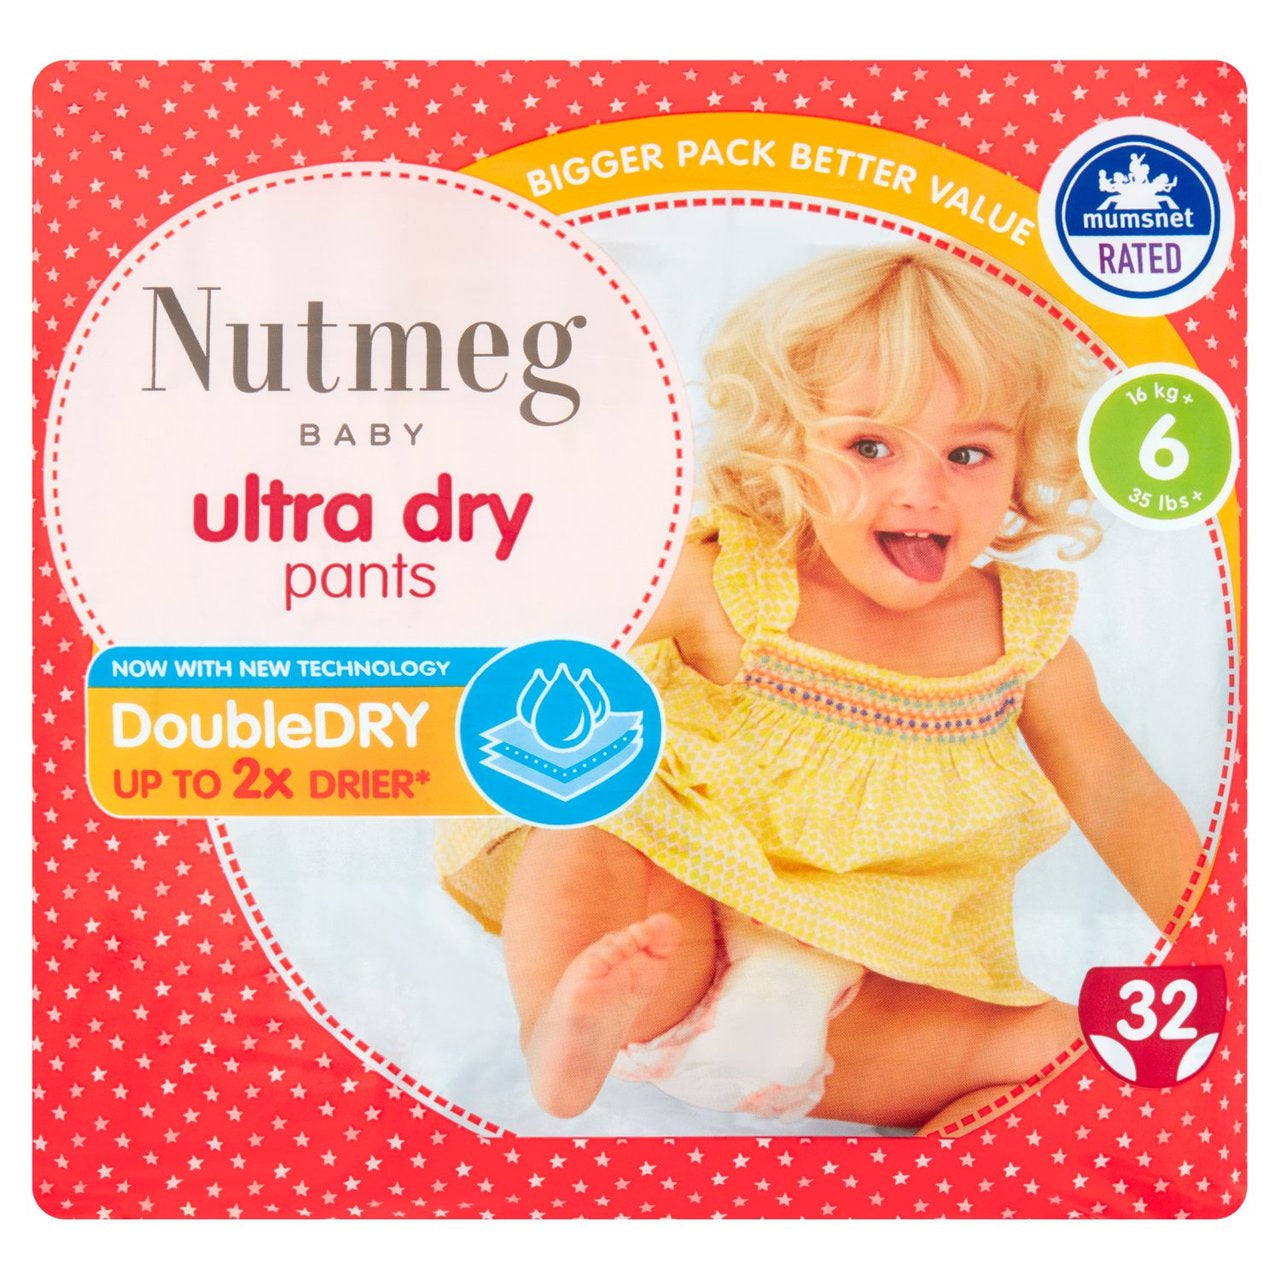 Nutmeg Ultra Dry Pants Size 6 Pants 32pk